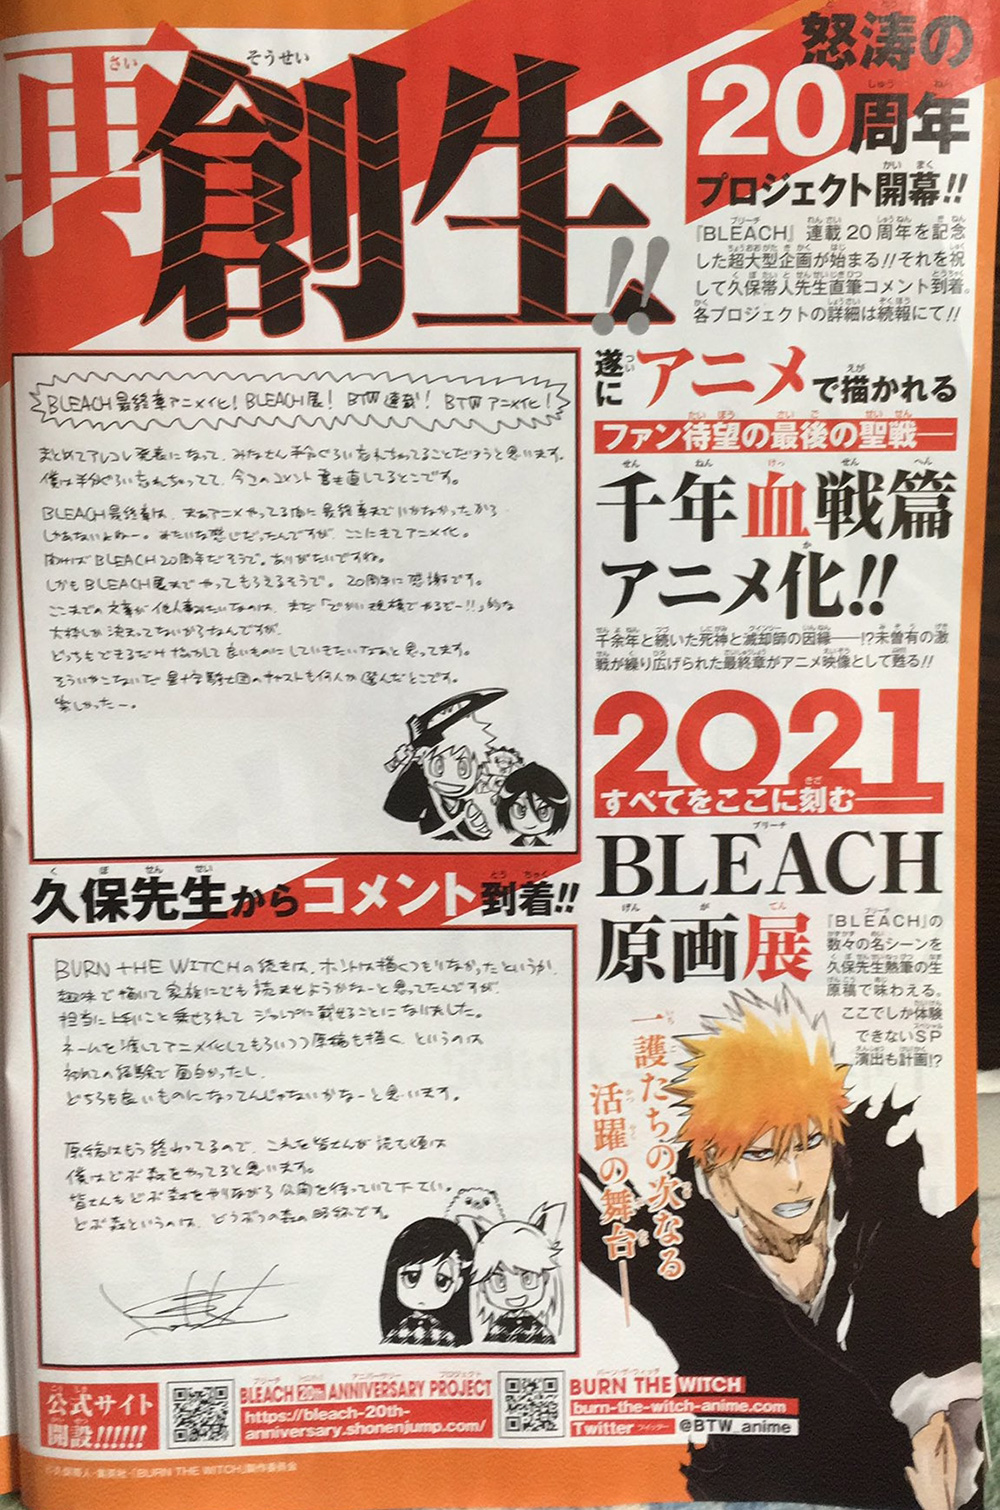 Bleach-Thousand-Year-Blood-War-Arc-Anime-Announcement-2